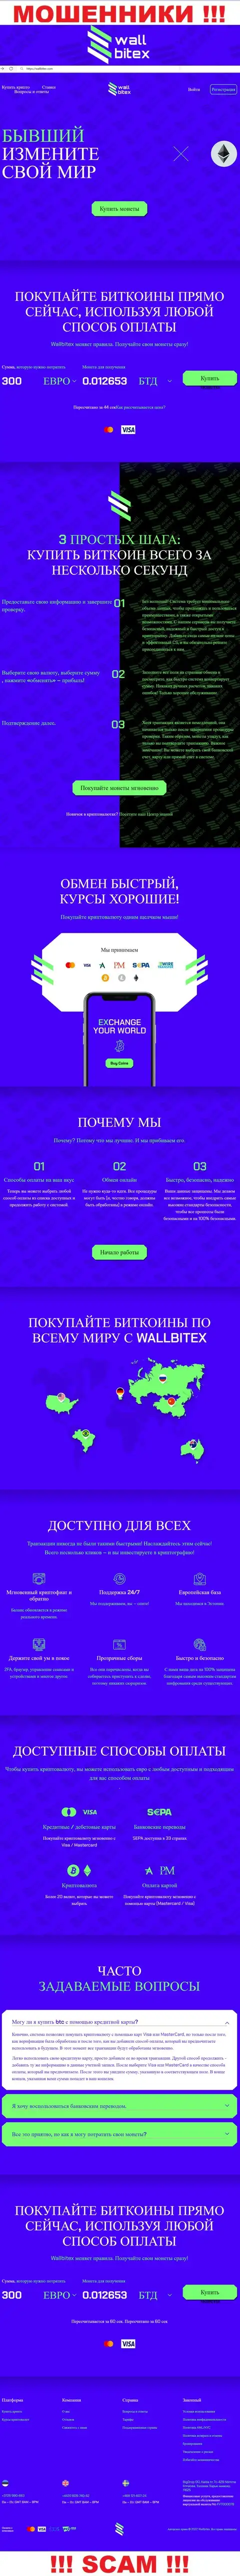 WallBitex Com - это сайт преступно действующей организации WallBitex